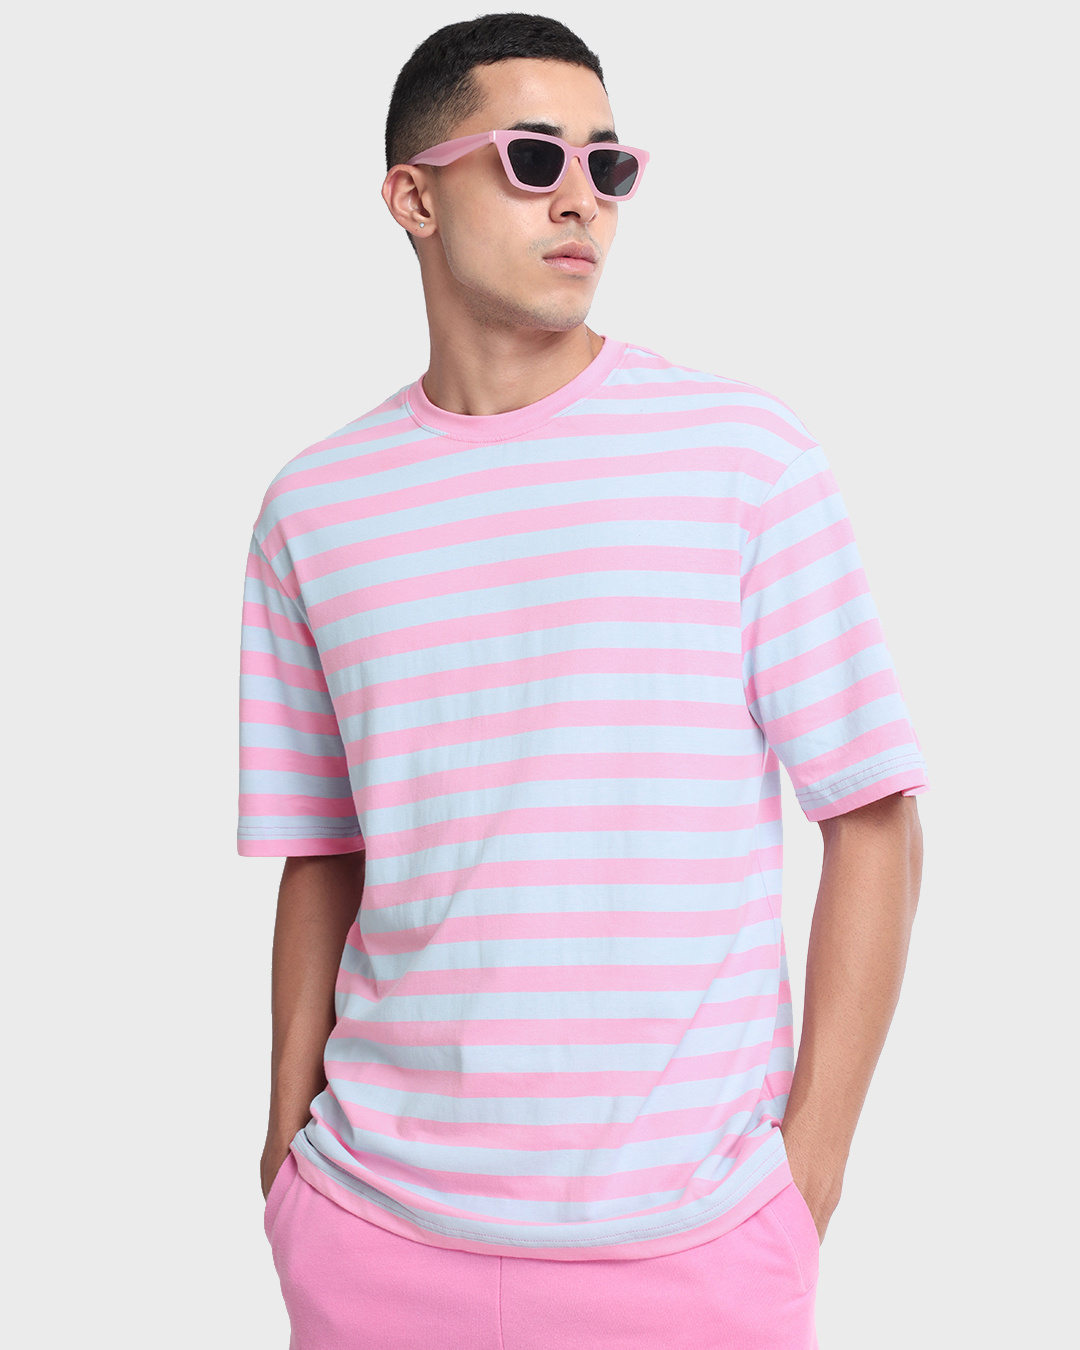 Buy Men's Pink Striped Oversized T-shirt Online at Bewakoof